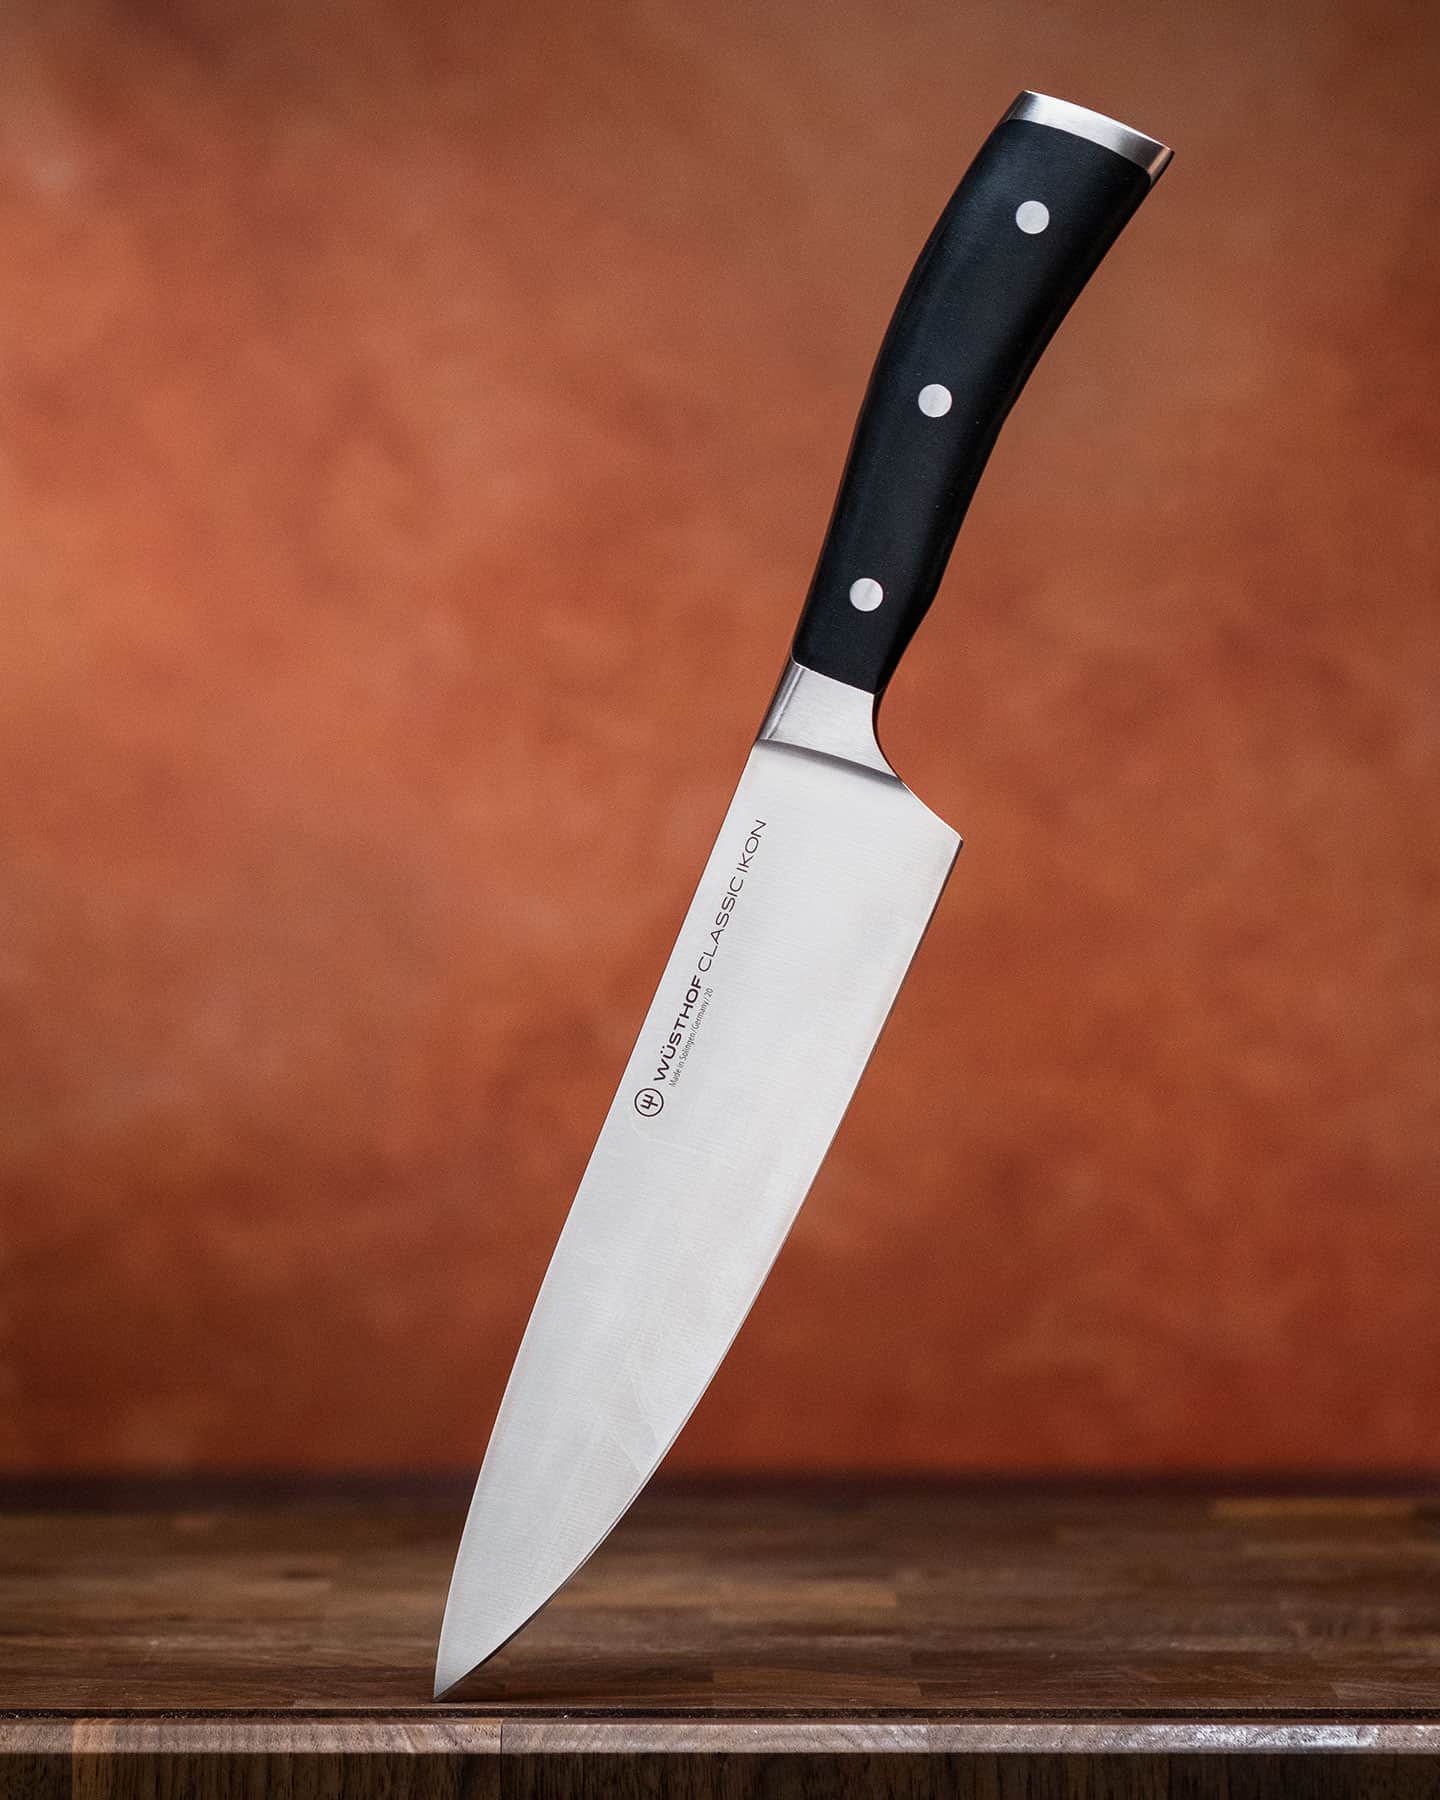 https://www.nothingbutknives.com/wp-content/uploads/2022/08/Wusthof-Classic-Ikon-Chef-Knife-Review.jpg